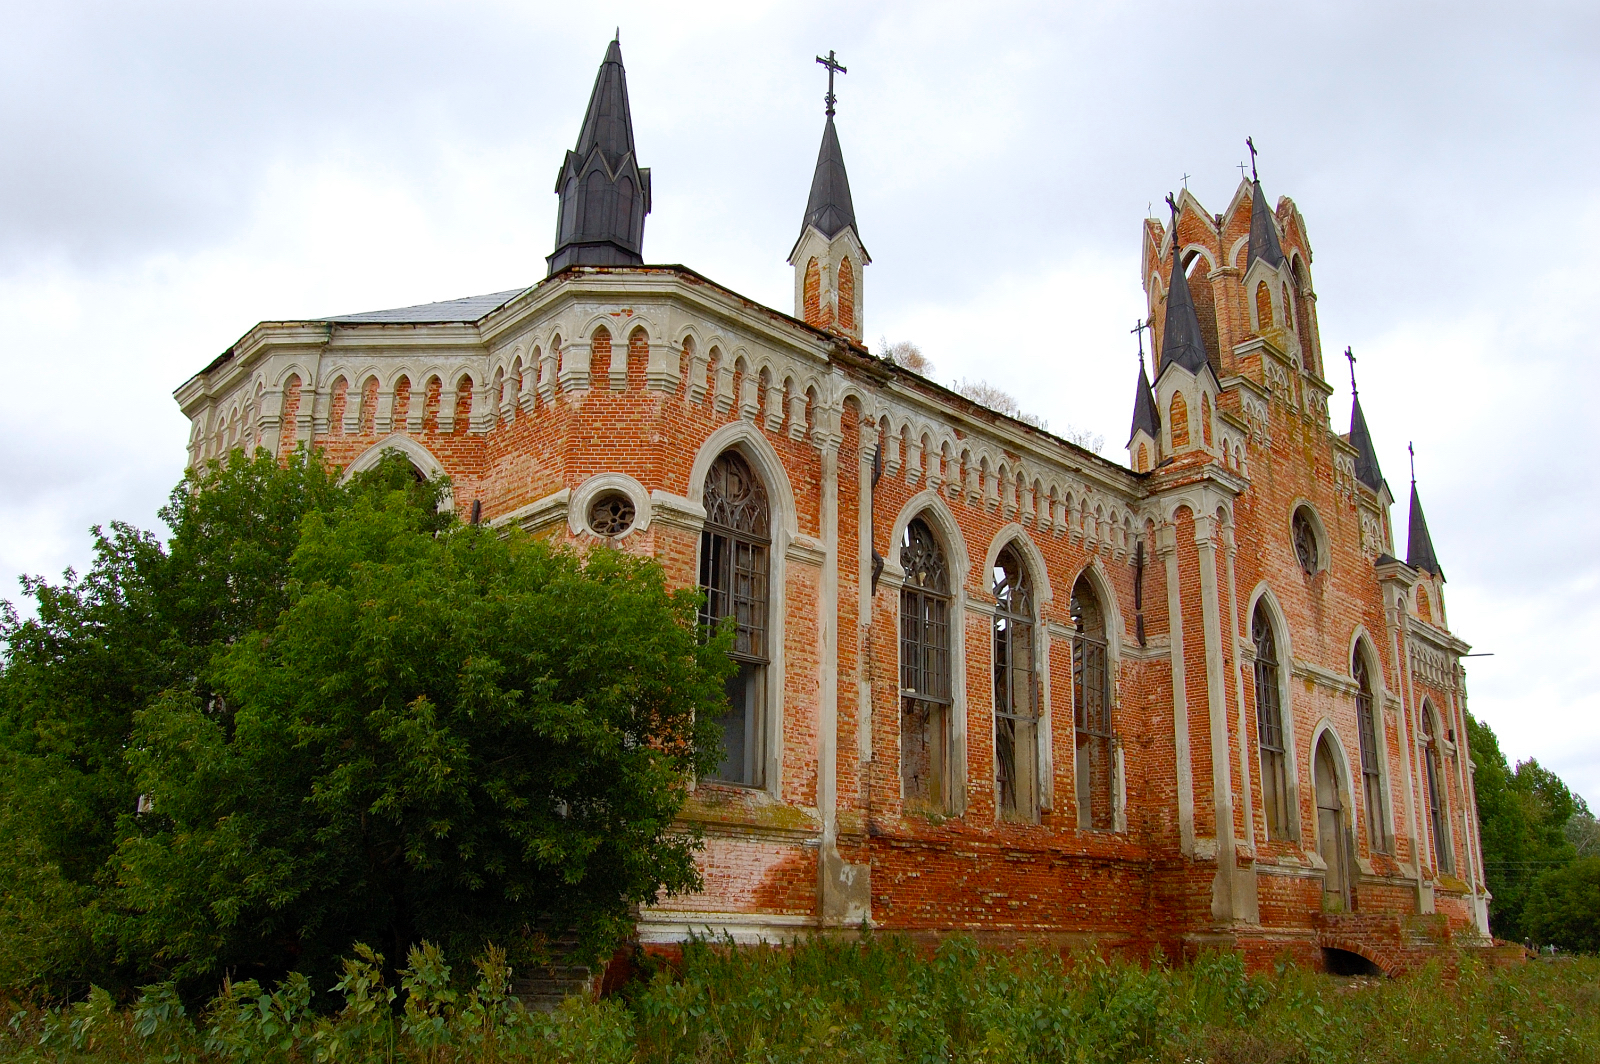 View of the magnificent church in Kamenka. Source: Steve Schreiber (2006).